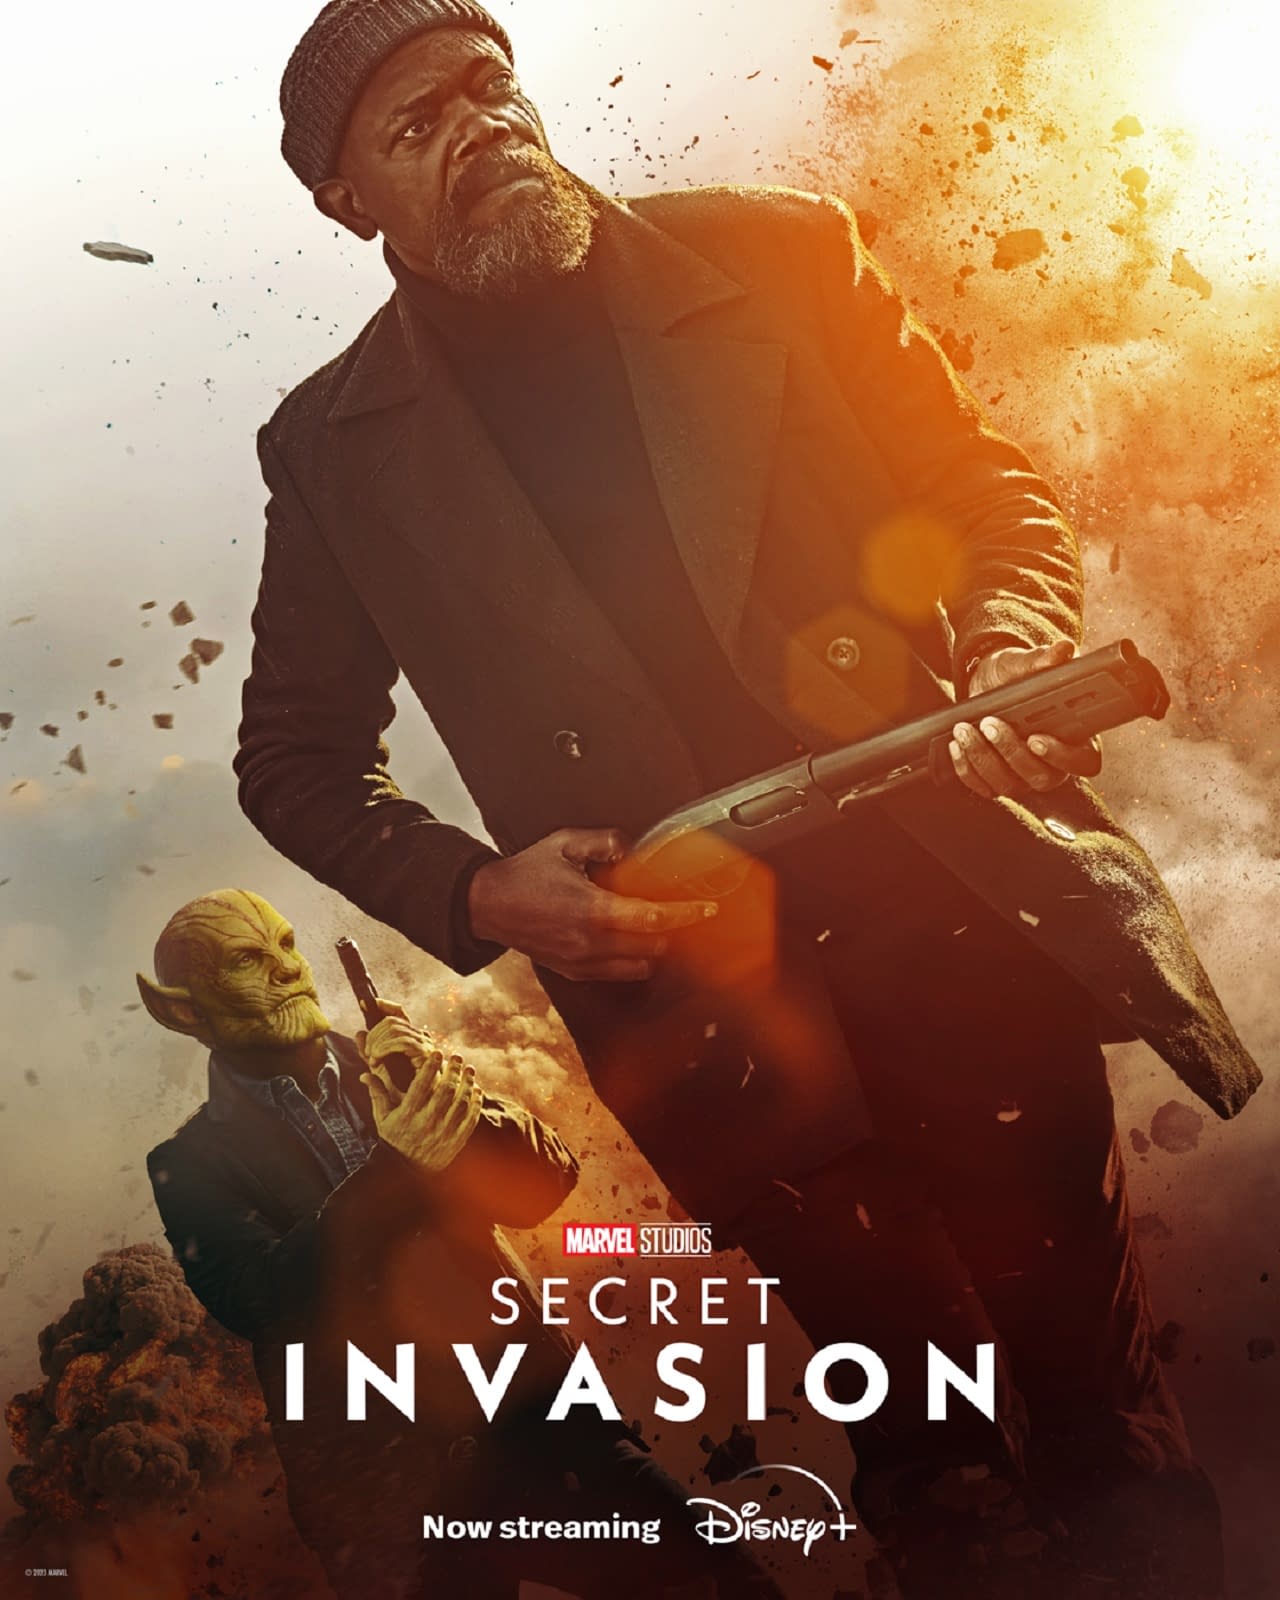 Marvel's 'Secret Invasion' Poster Revealed, First Trailer Drops